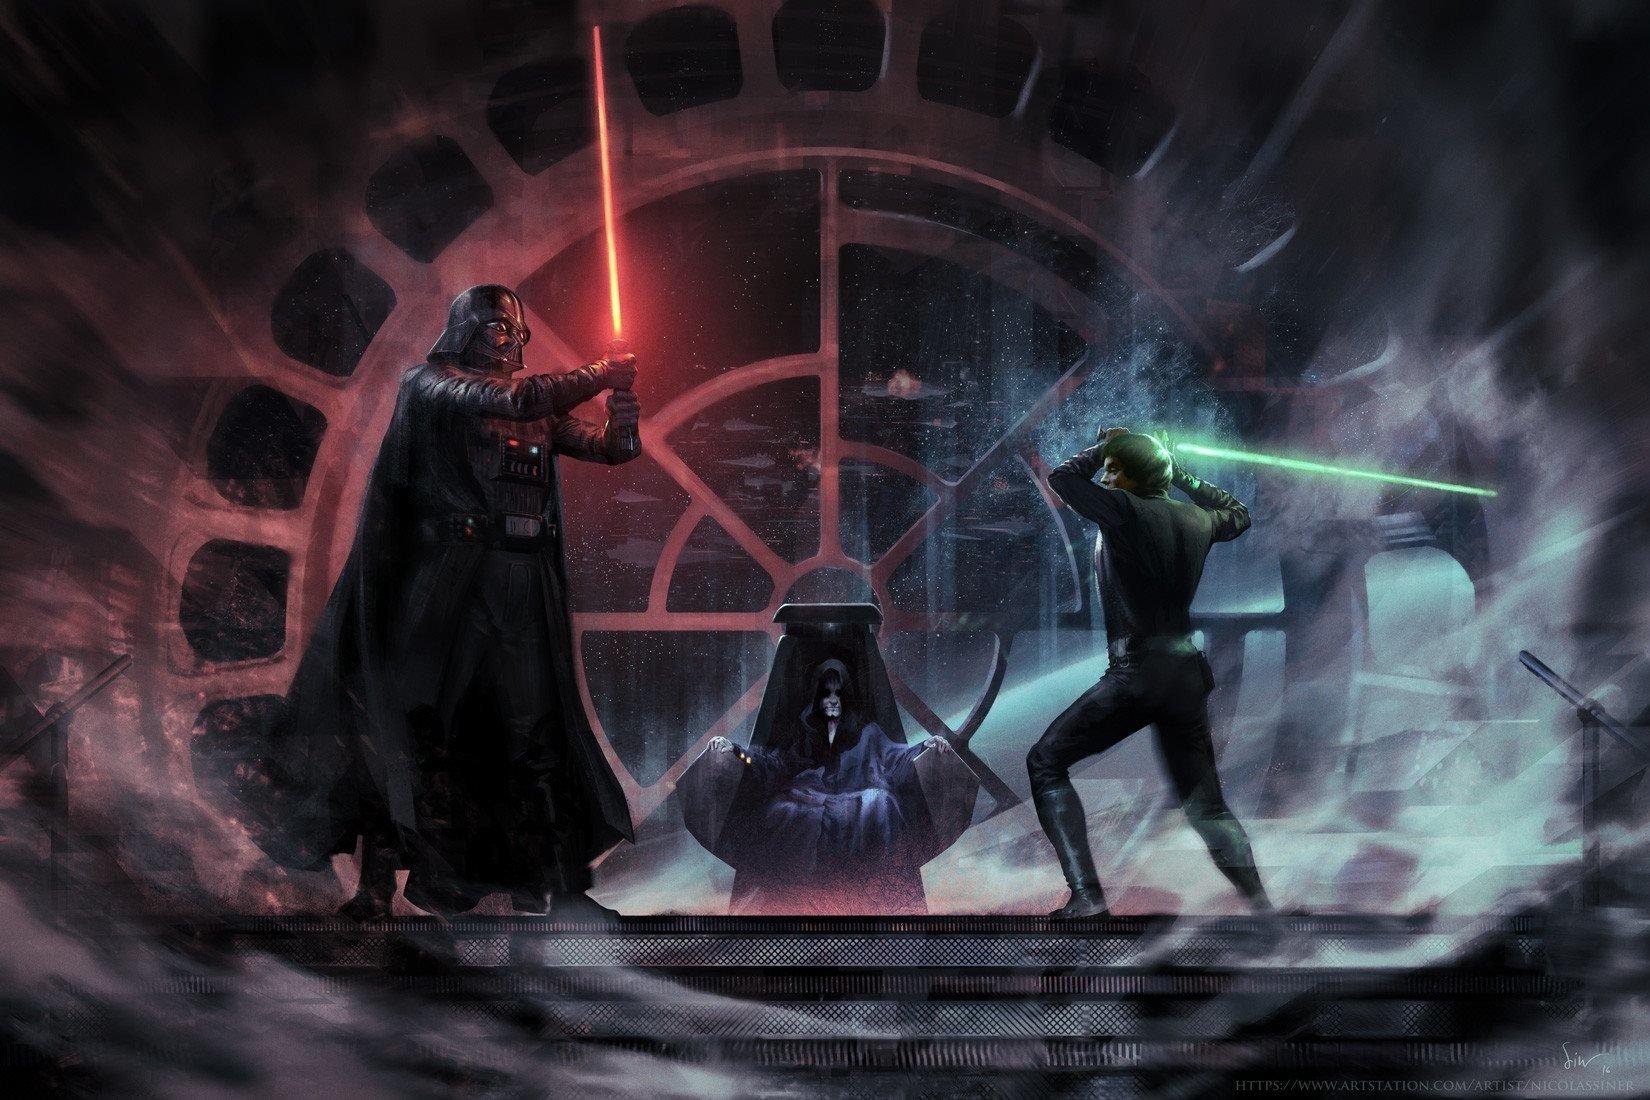 Emperor Palpatine, Luke Skywalker, Star Wars, Darth Vader, Jedi and Sith (Star Wars) Wallpaper and Background Imagex1100